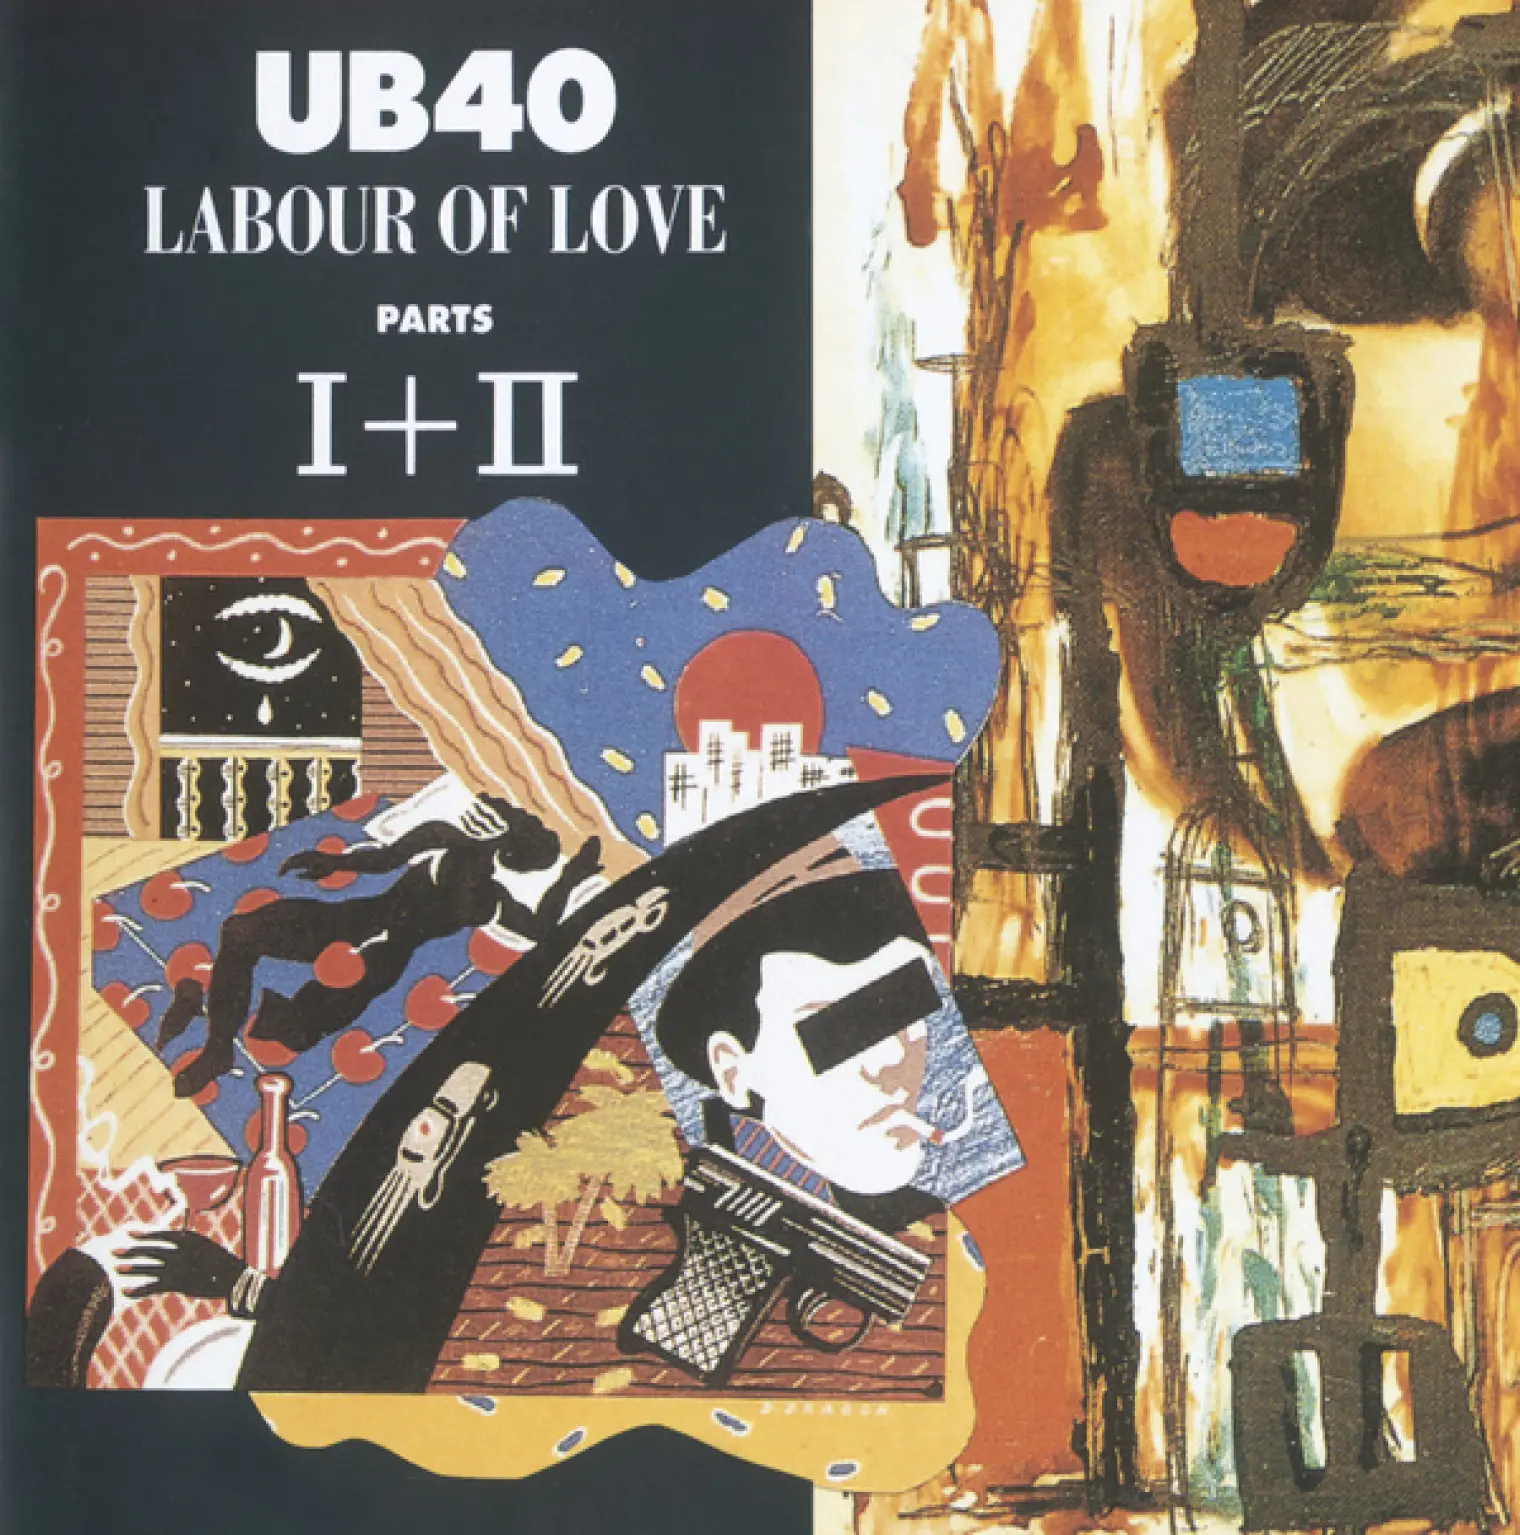 Labour Of Love I & II -  UB40 